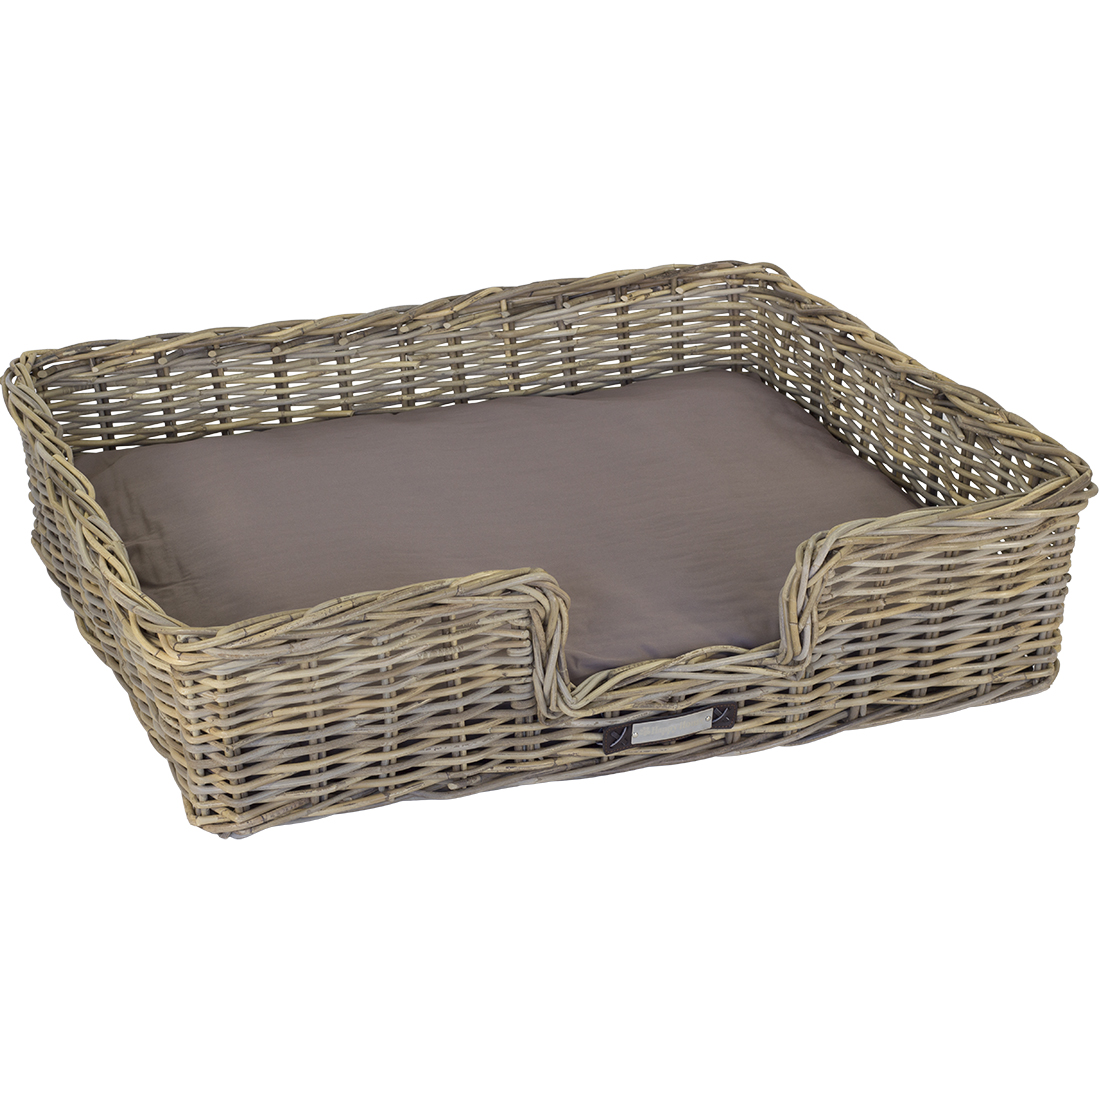 classic rattan basket xxl rectangular